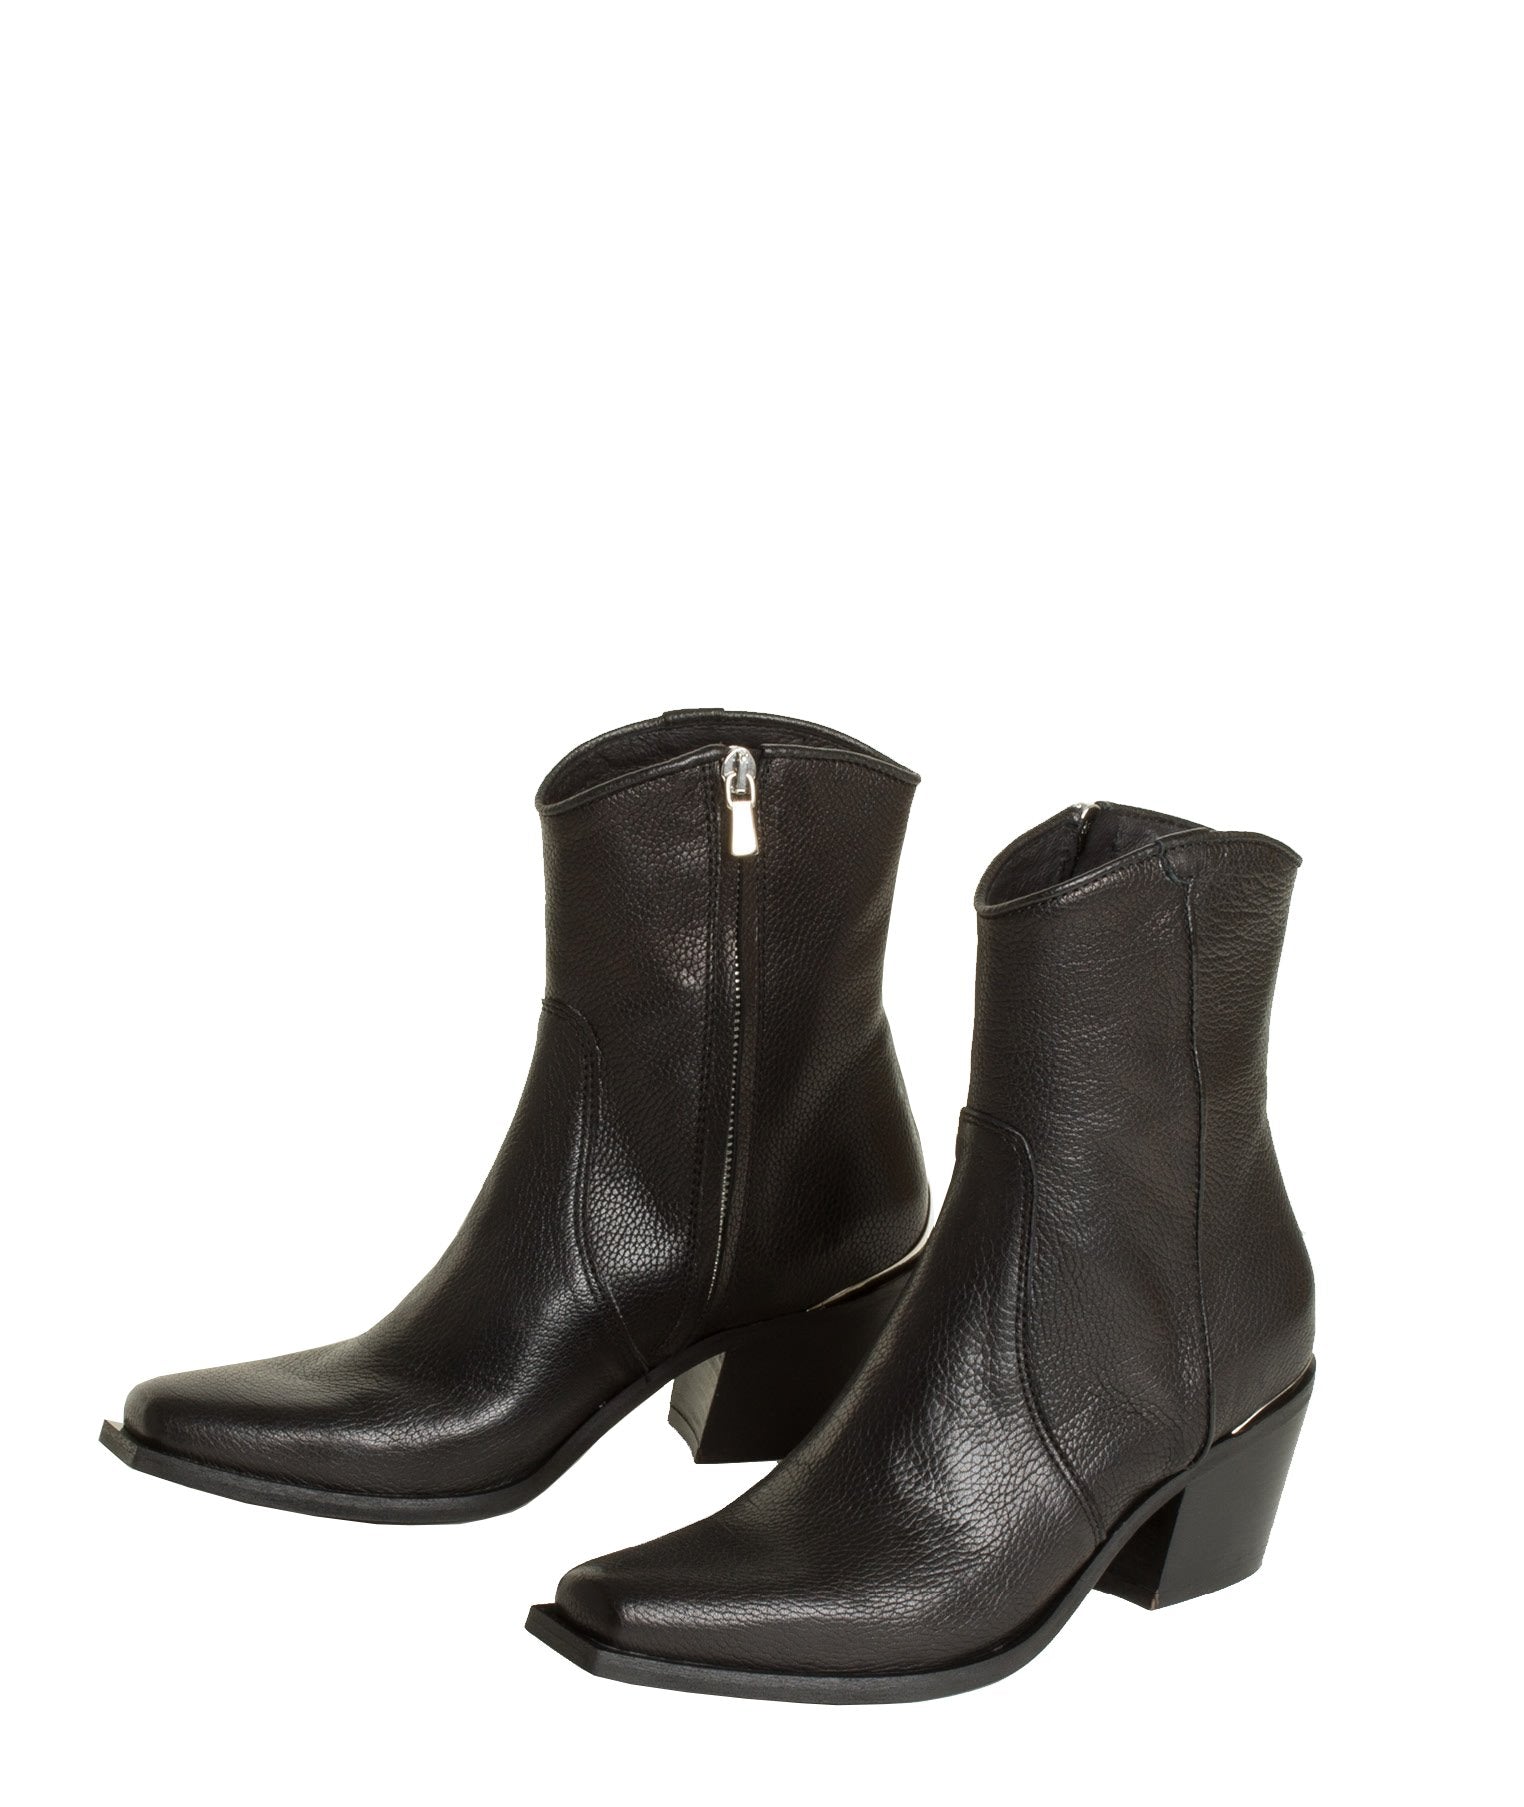 Tessa Buffalo Black Boots TESSA-BLACK-1 - 2